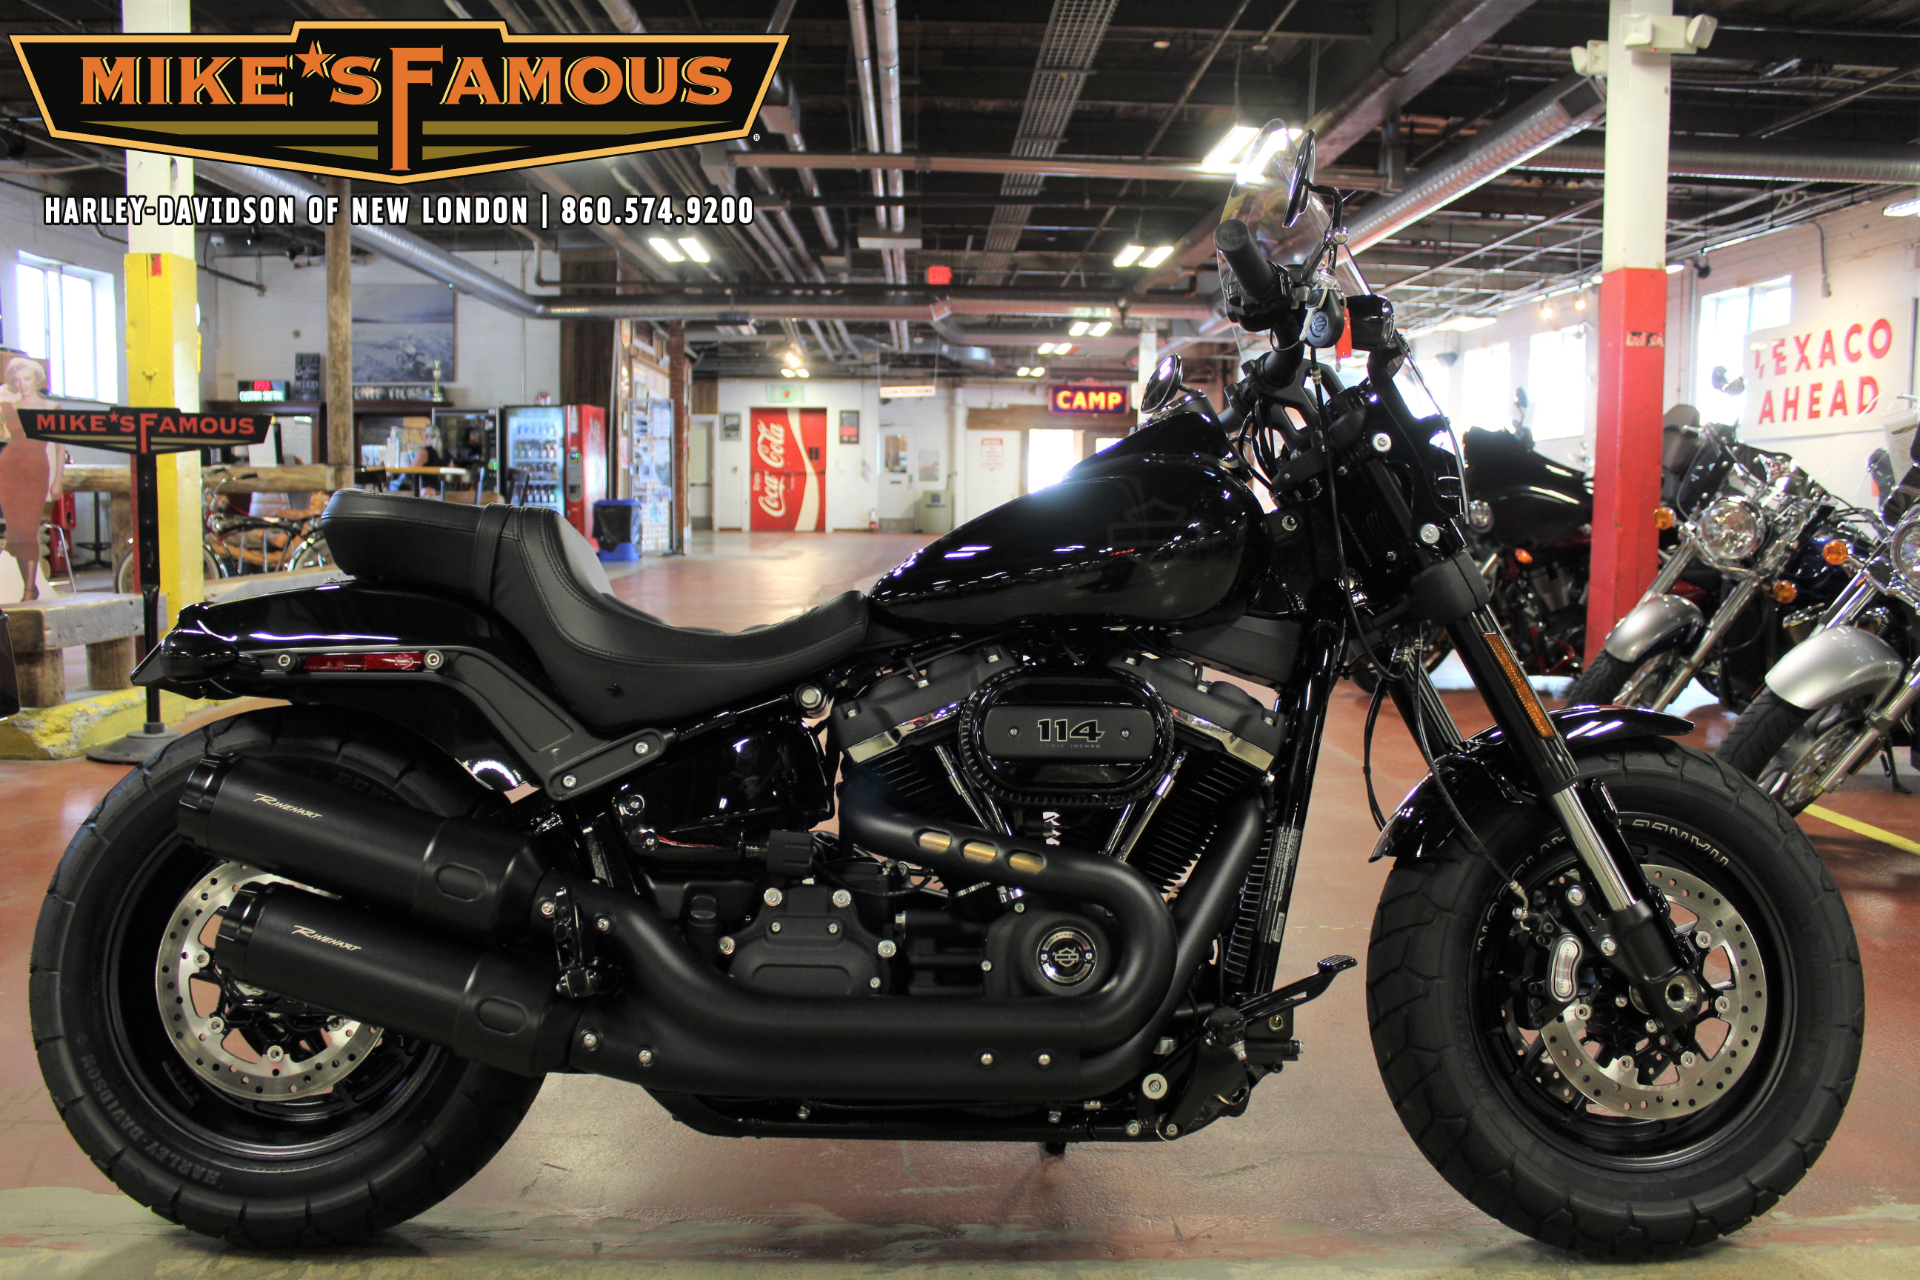 Used 2020 Harley Davidson Fat Bob 114 Vivid Black Motorcycles In New London Ct T10362